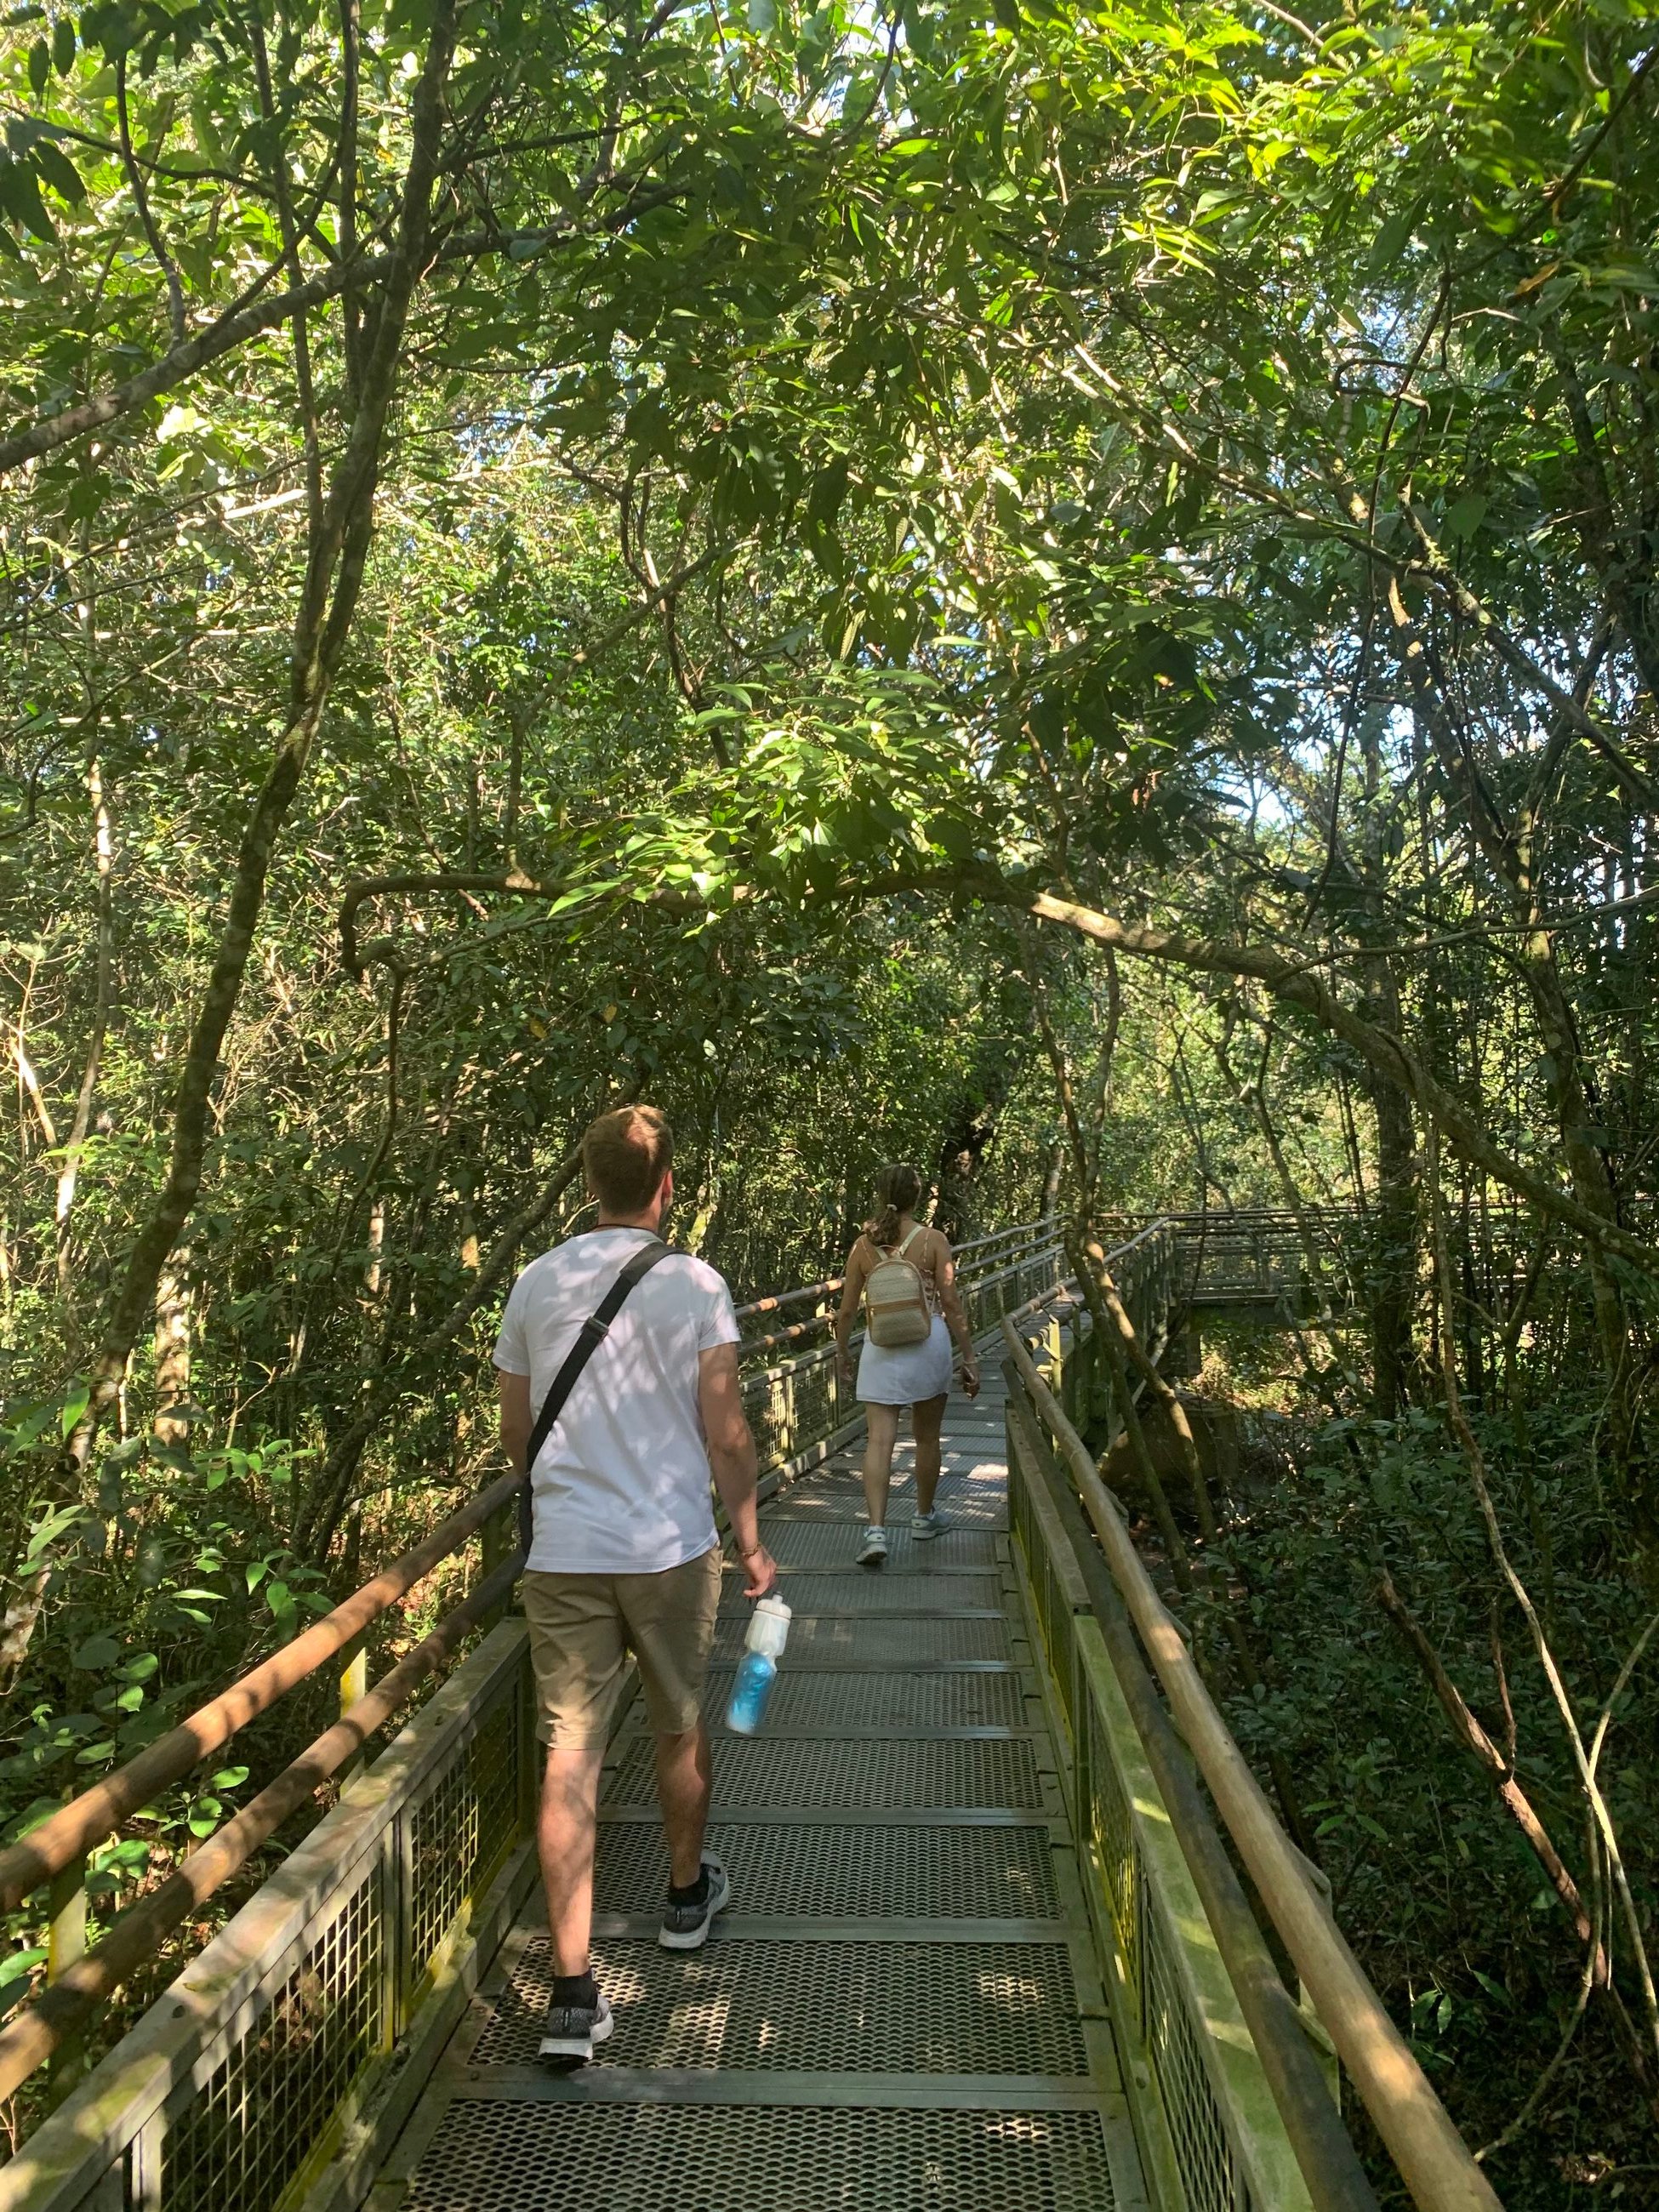 The jungle in Iguazú